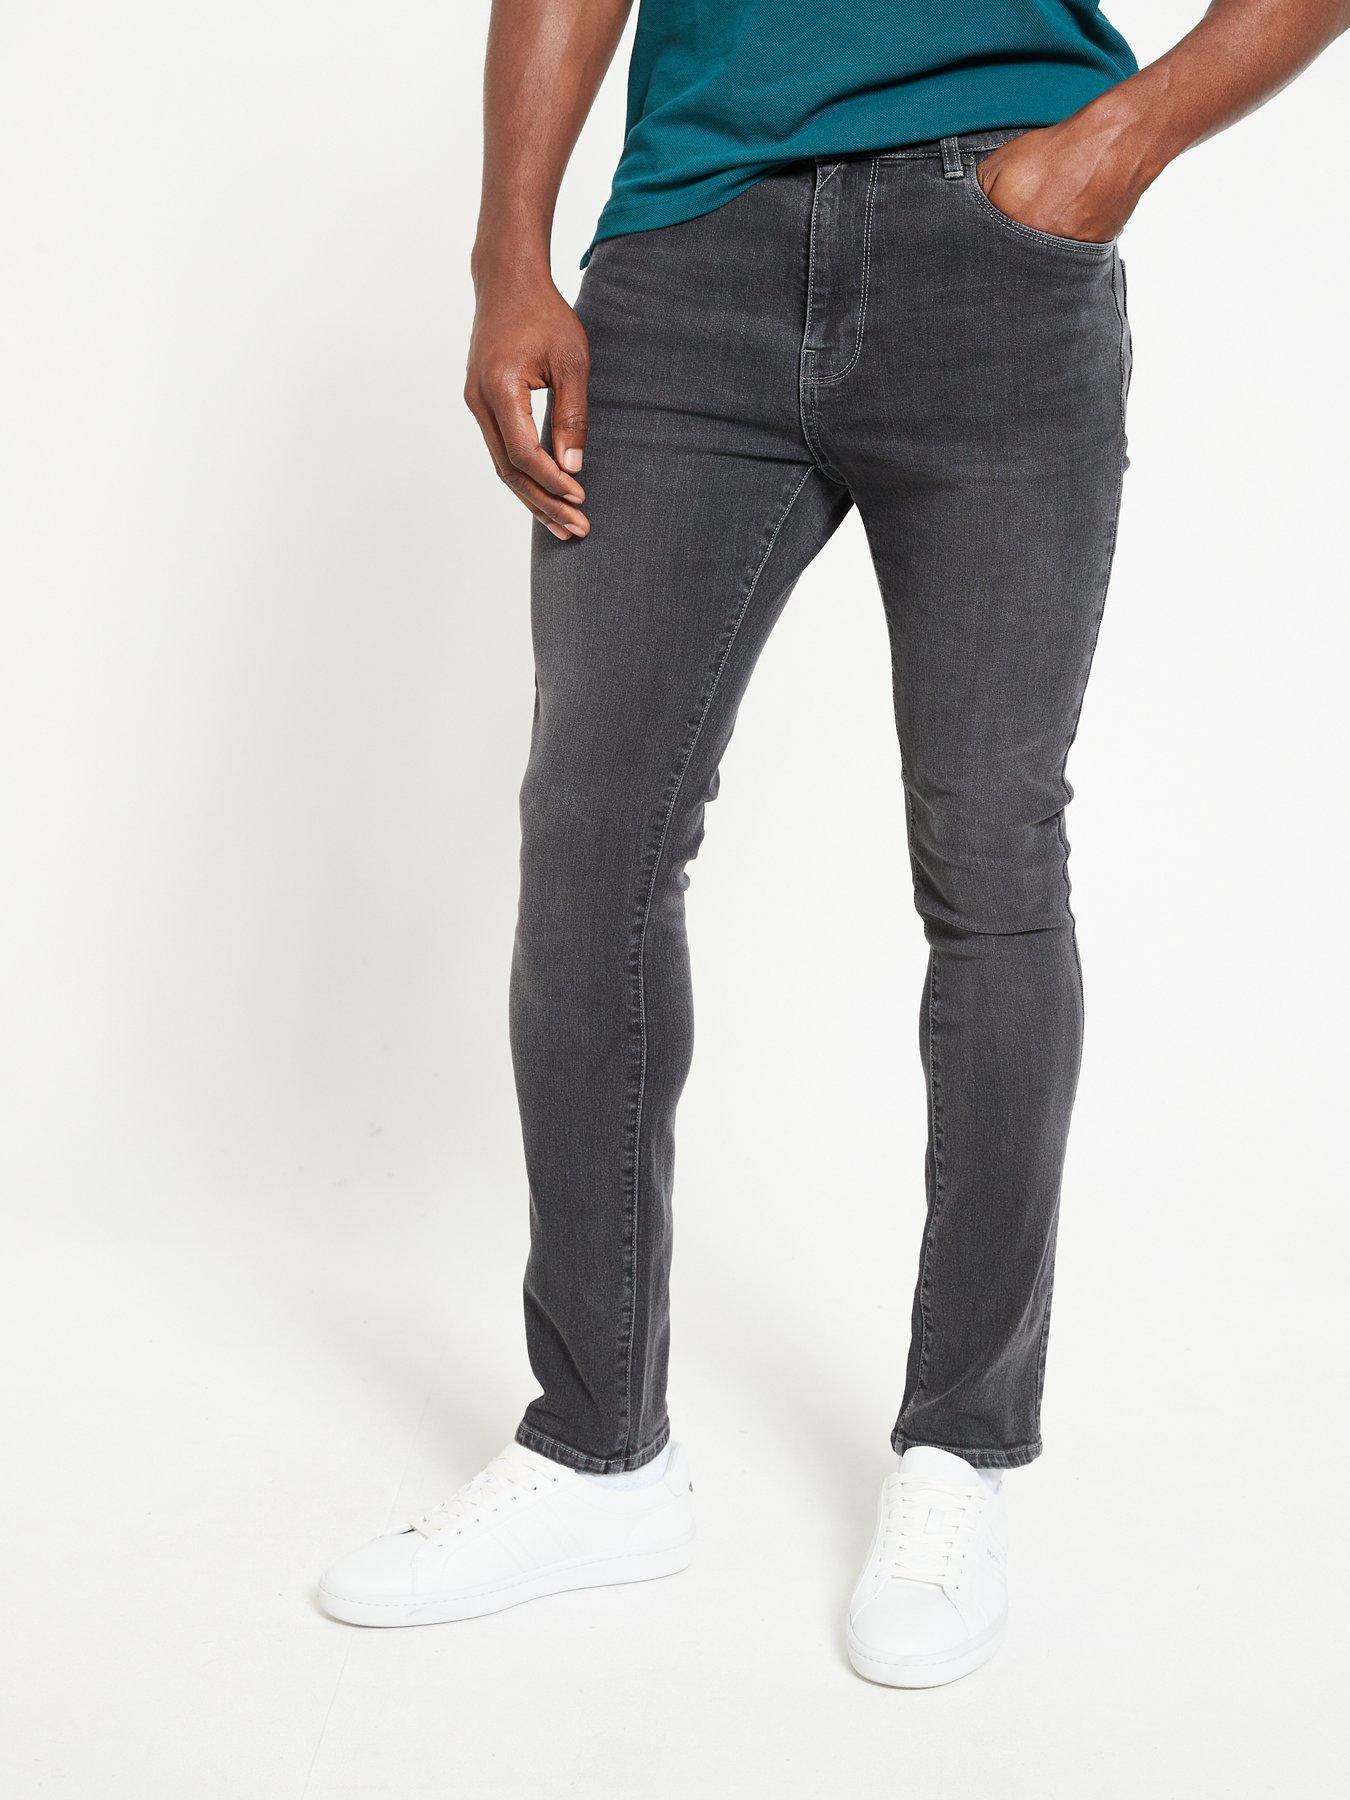 New Men Denim Skinny Jeans Slim Fit Zipper Solid Colors 11 Colors Sizes 30-40 